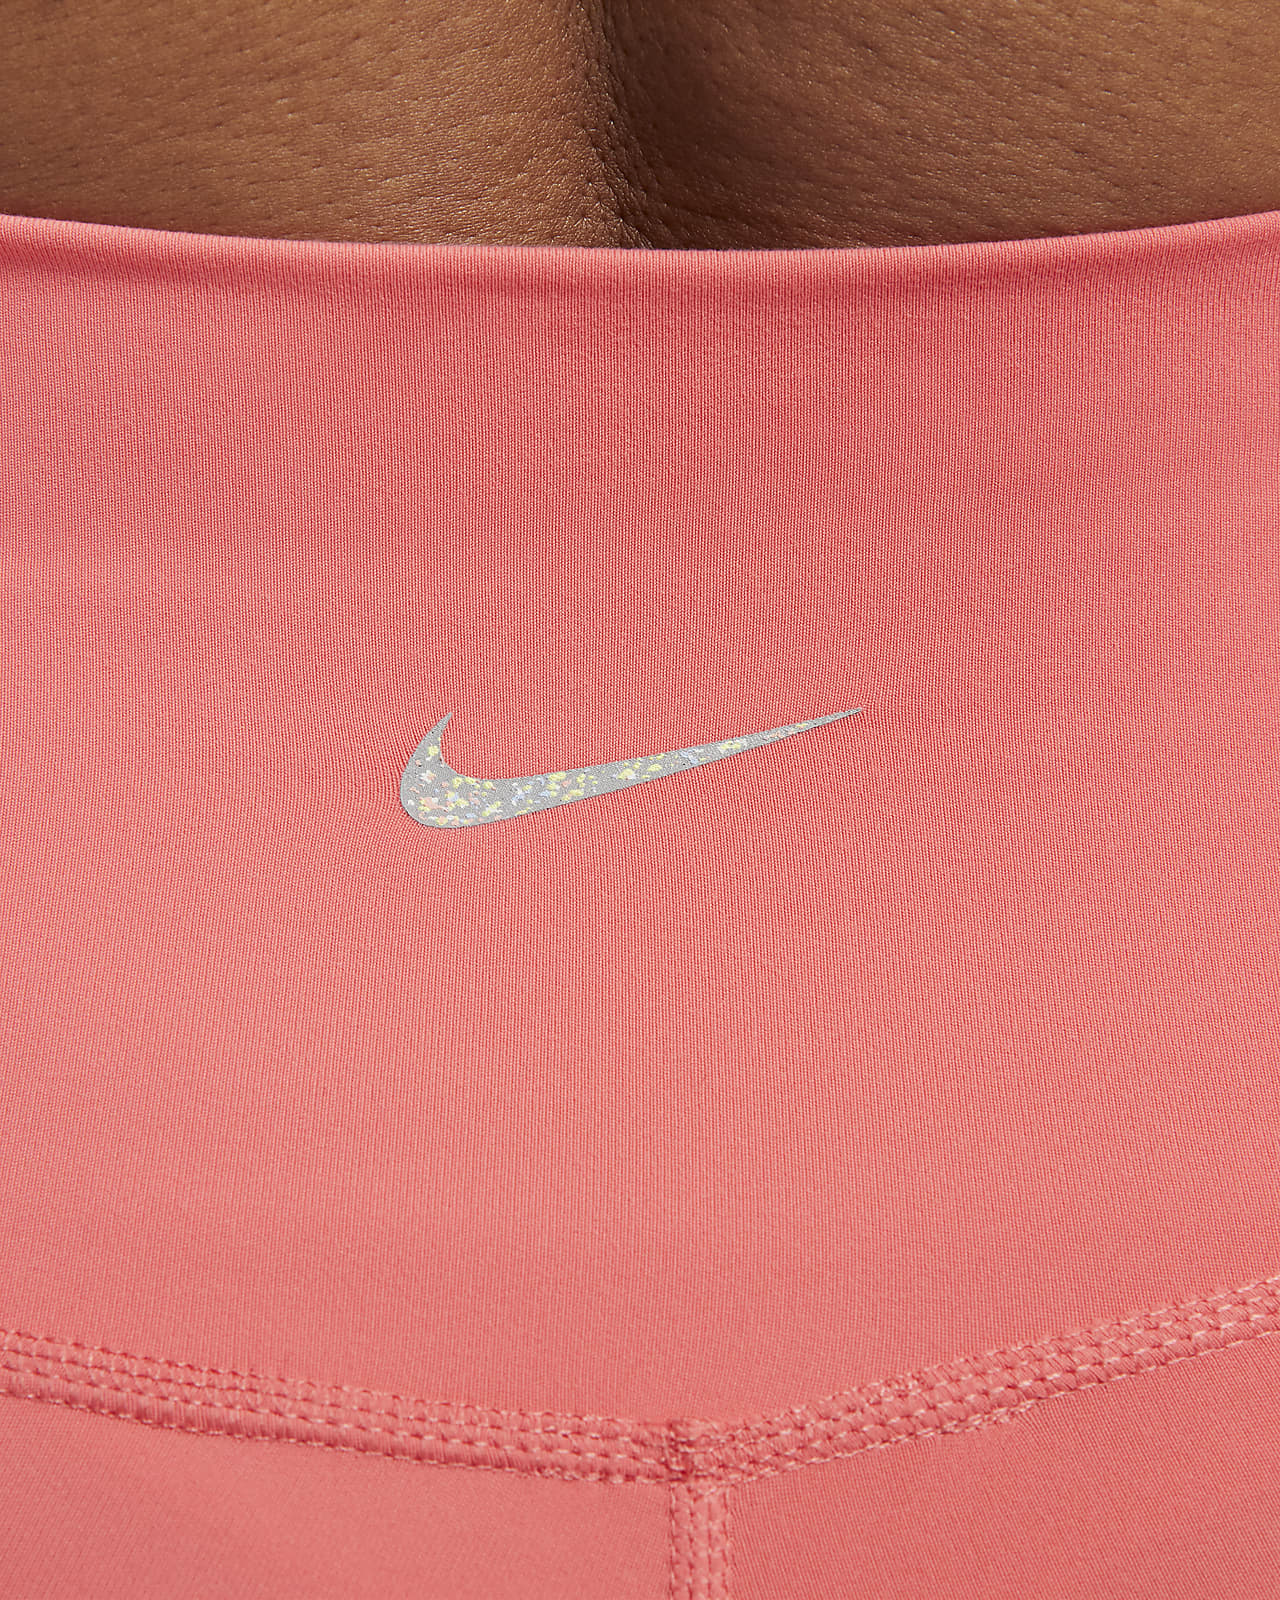 Nike Yoga Luxe Women's High-Waisted Shorts. Nike HR